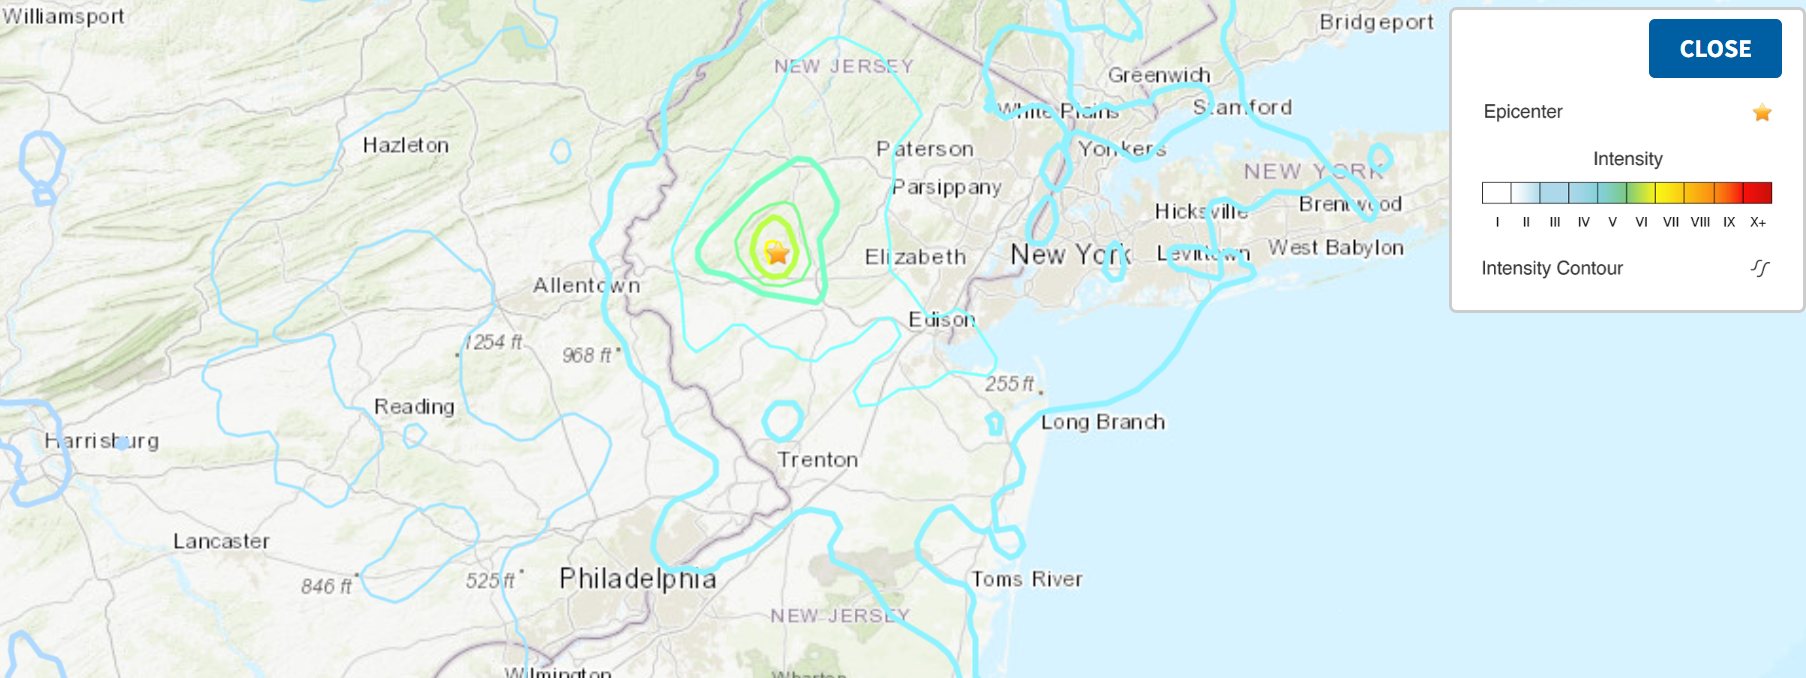 Magnitude 4.8 earthquake 7 km north of Whitehouse Station strikes NJ